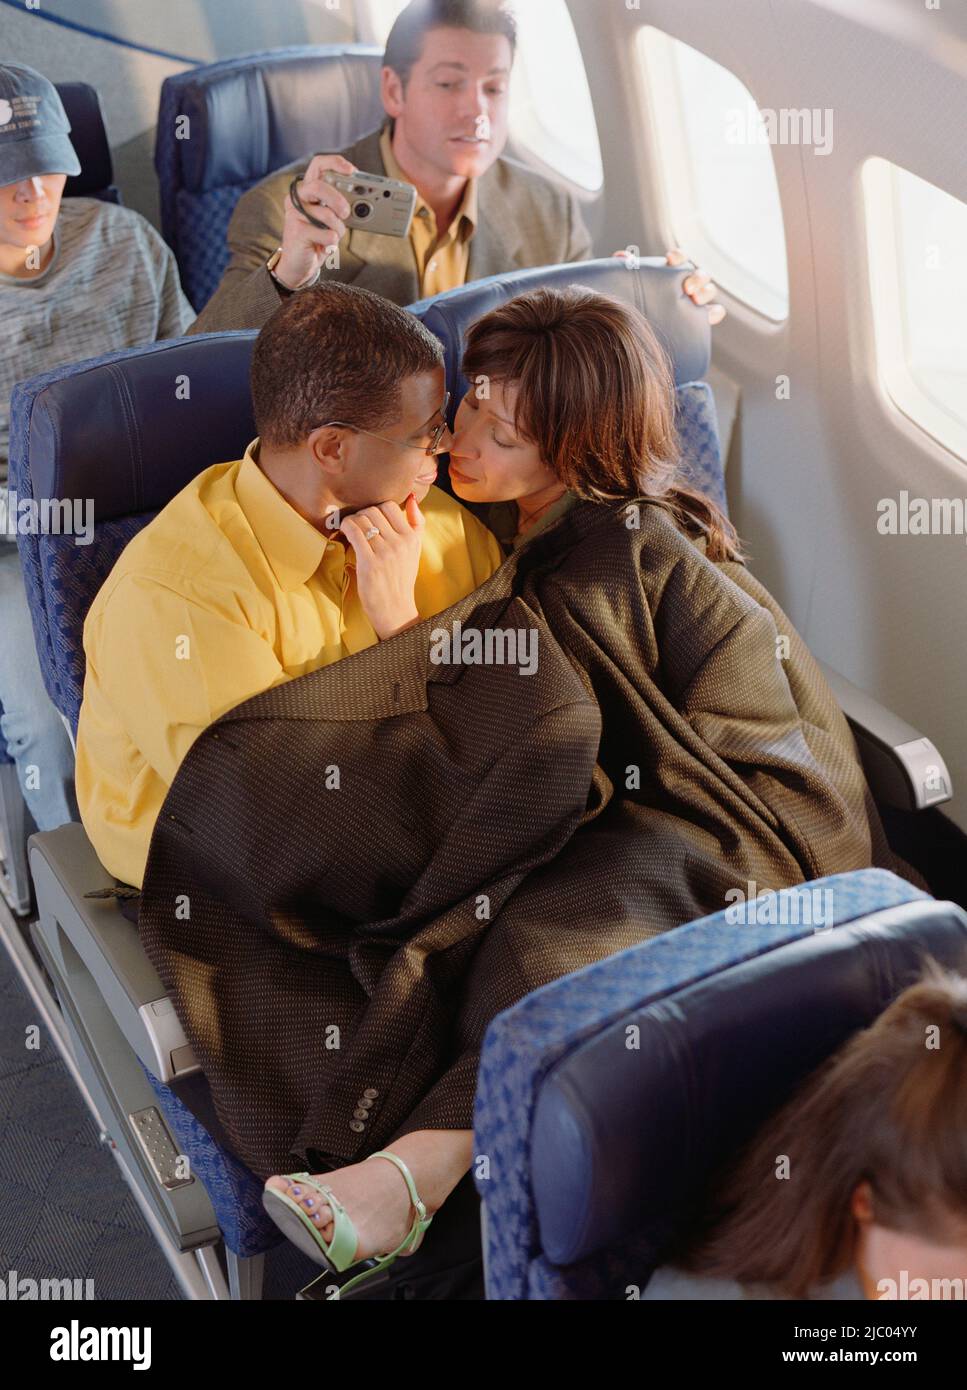 Mature couple cuddling on airplane Stock Photo